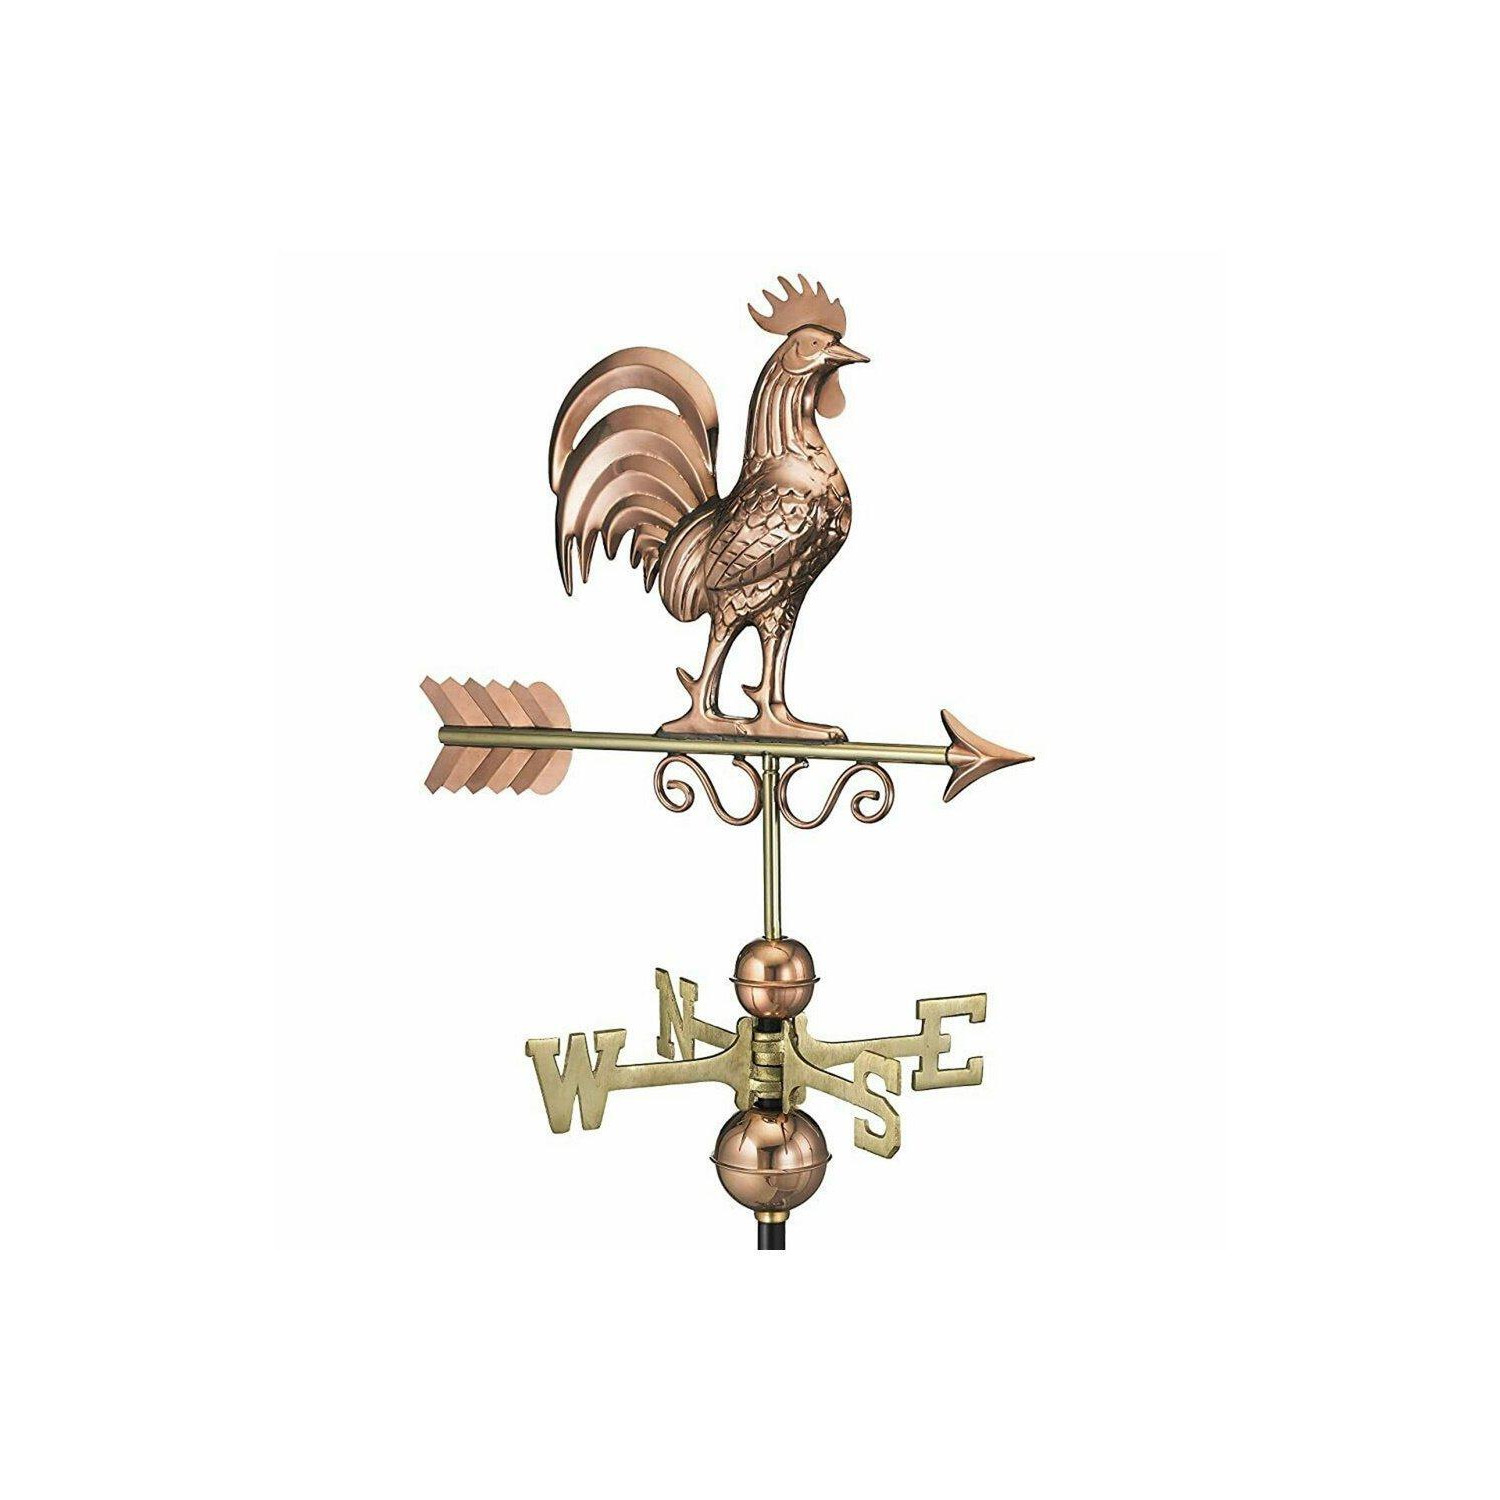 Bantam Rooster Farmhouse Copper Weathervane - image 1